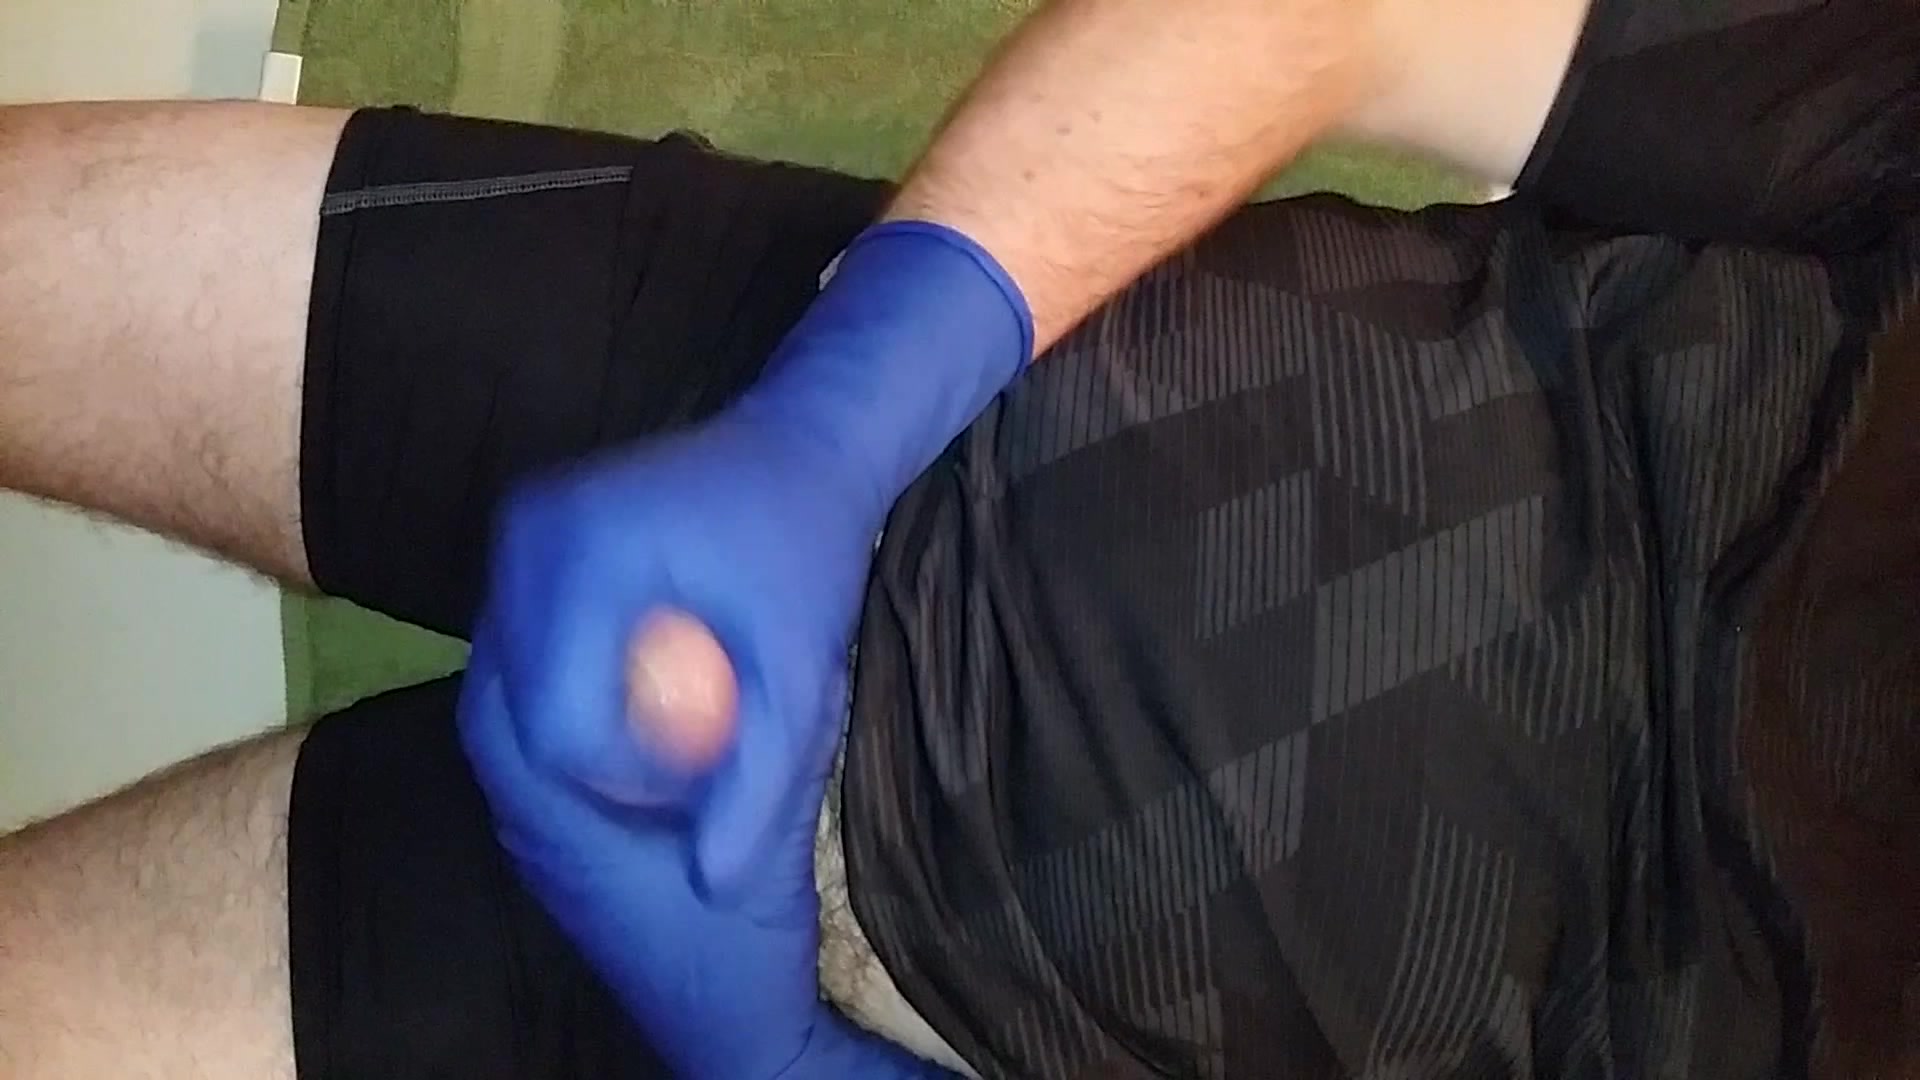 Stroking in Blue Biogel Surgical Gloves